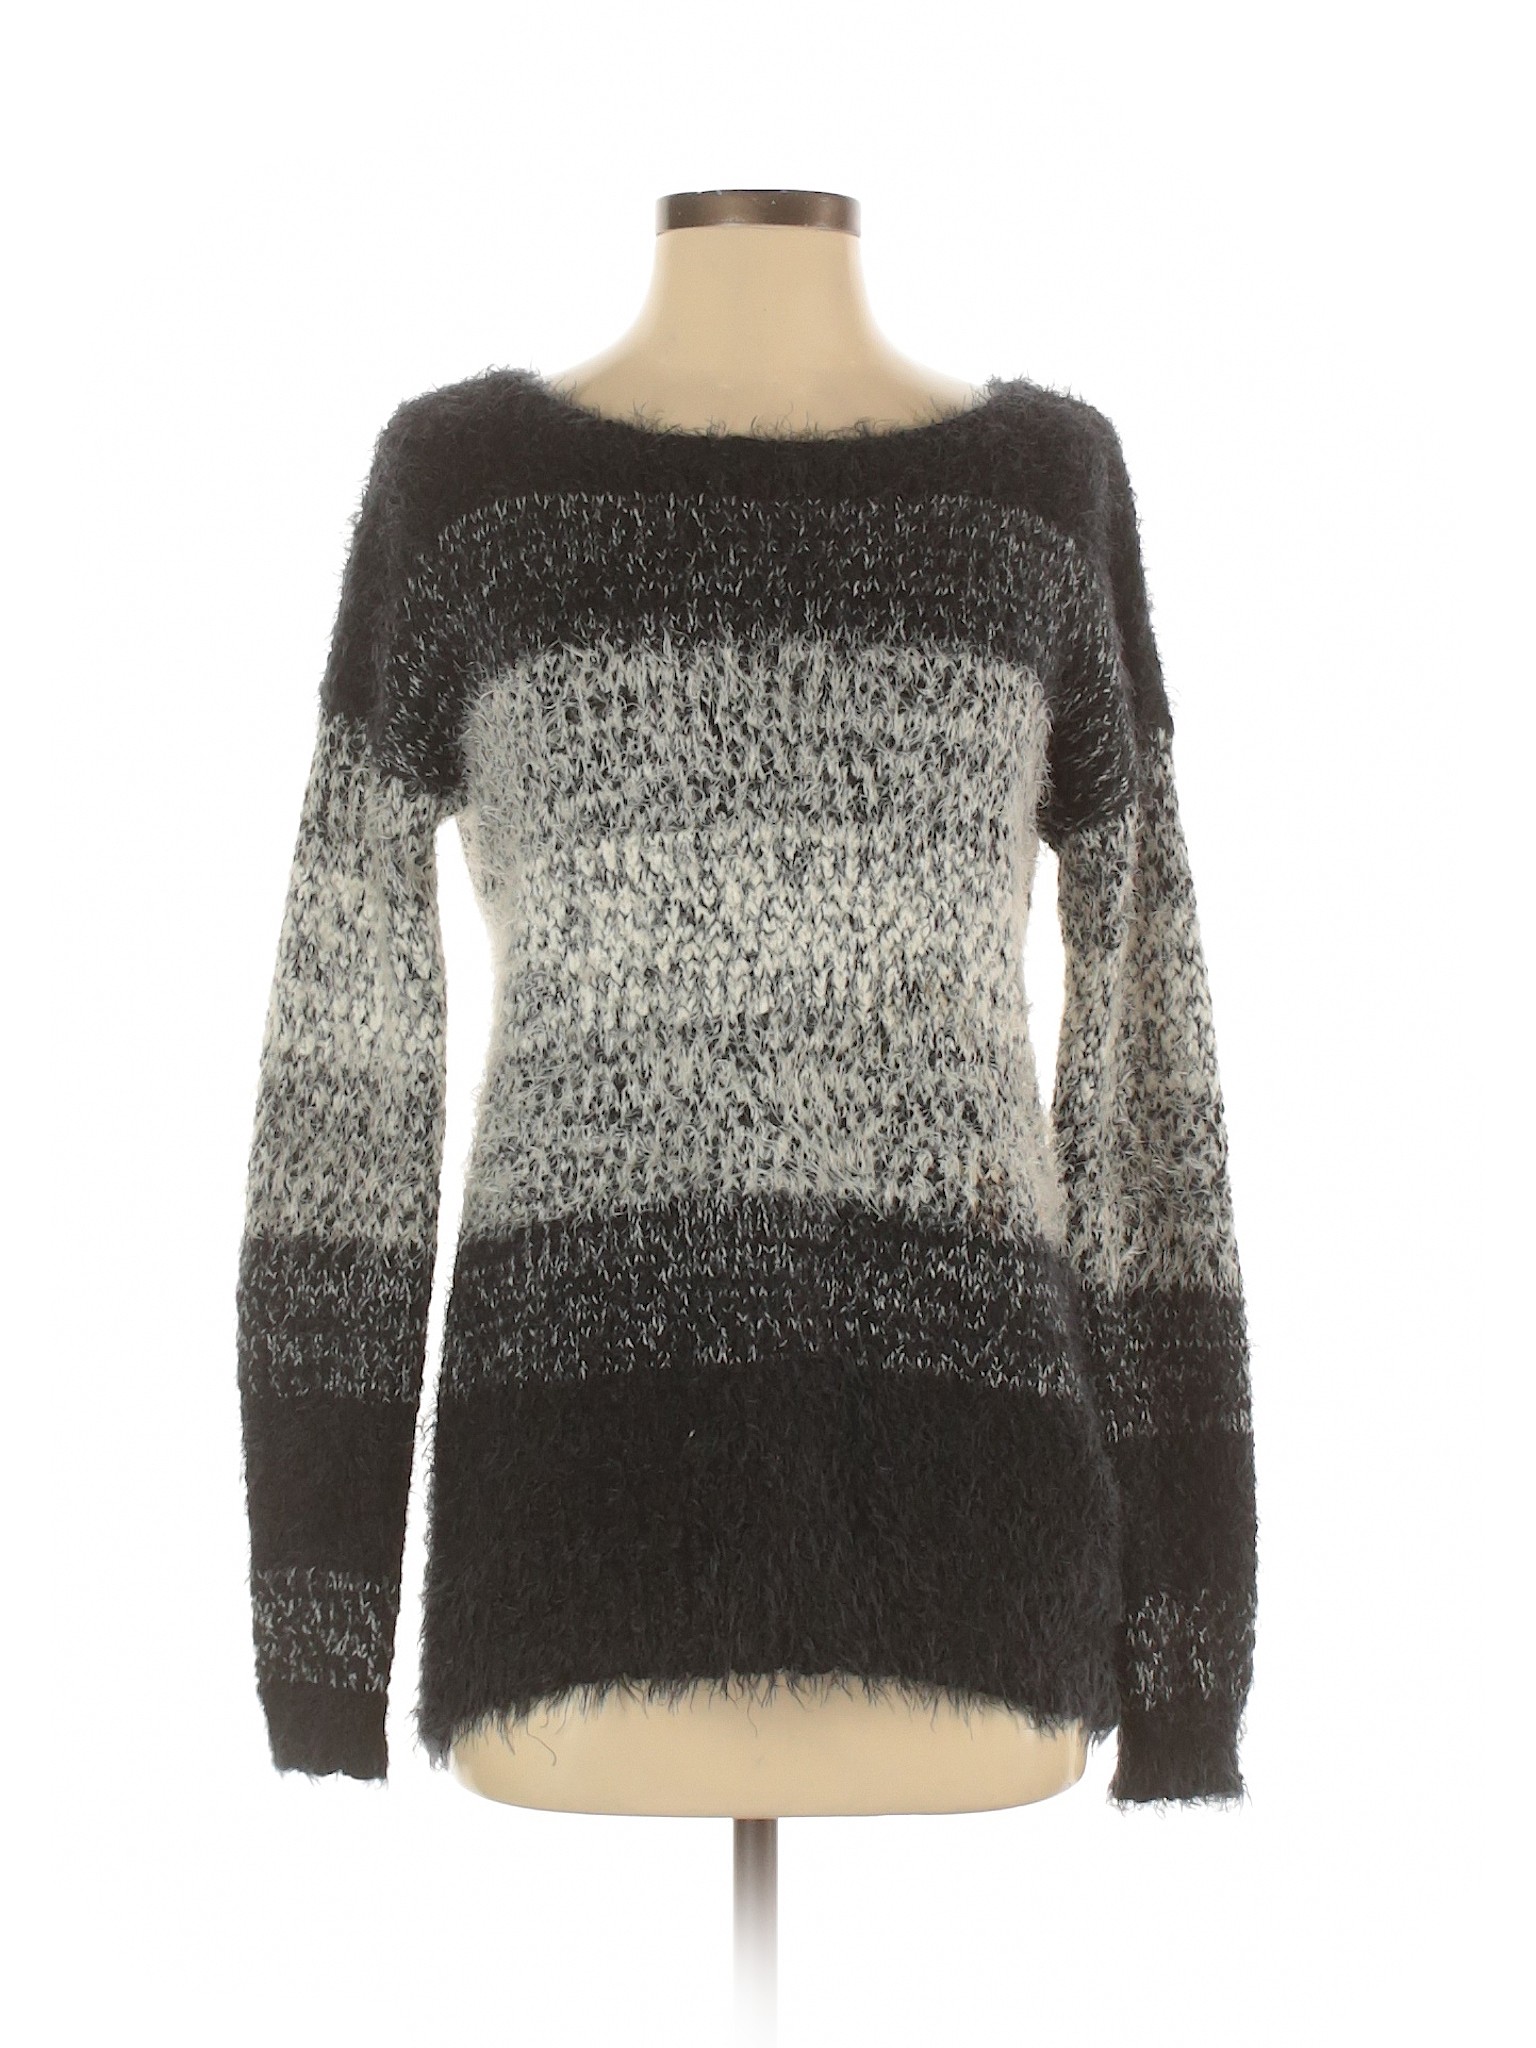 Express Women Gray Pullover Sweater S | eBay